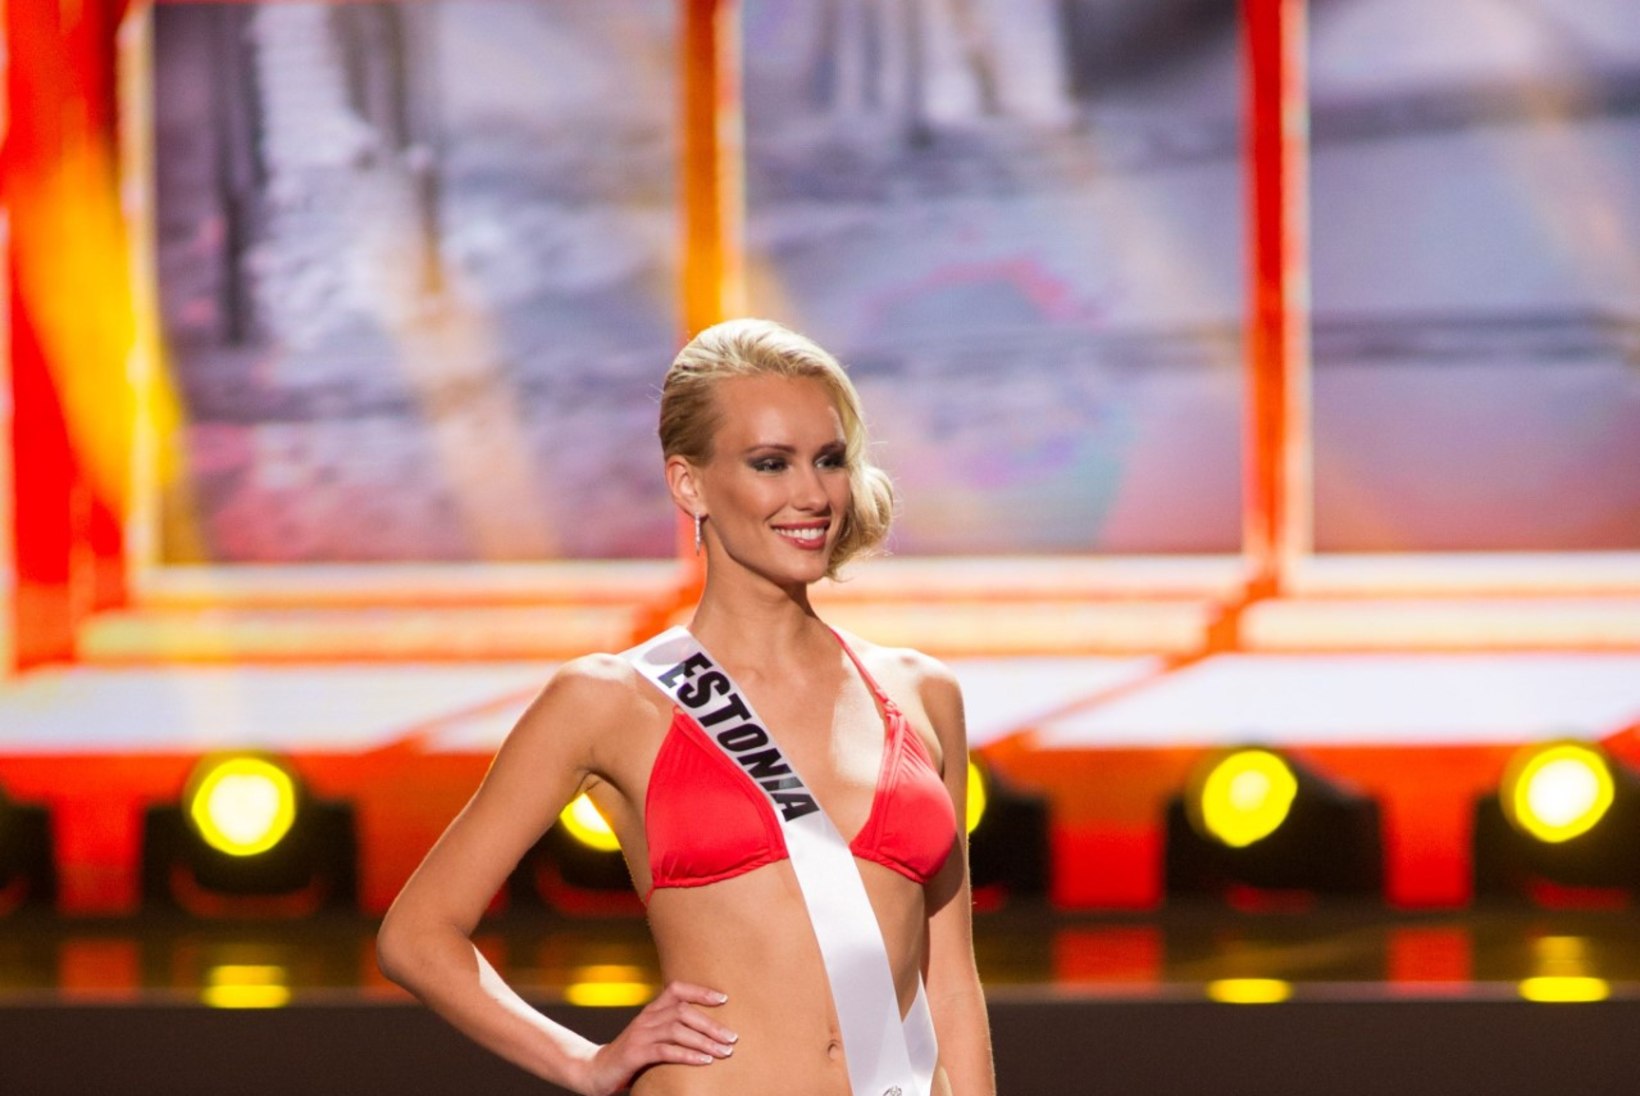 FOTOD: Kristina Karjalainen demonstreeris "Miss Universumil" bikiine